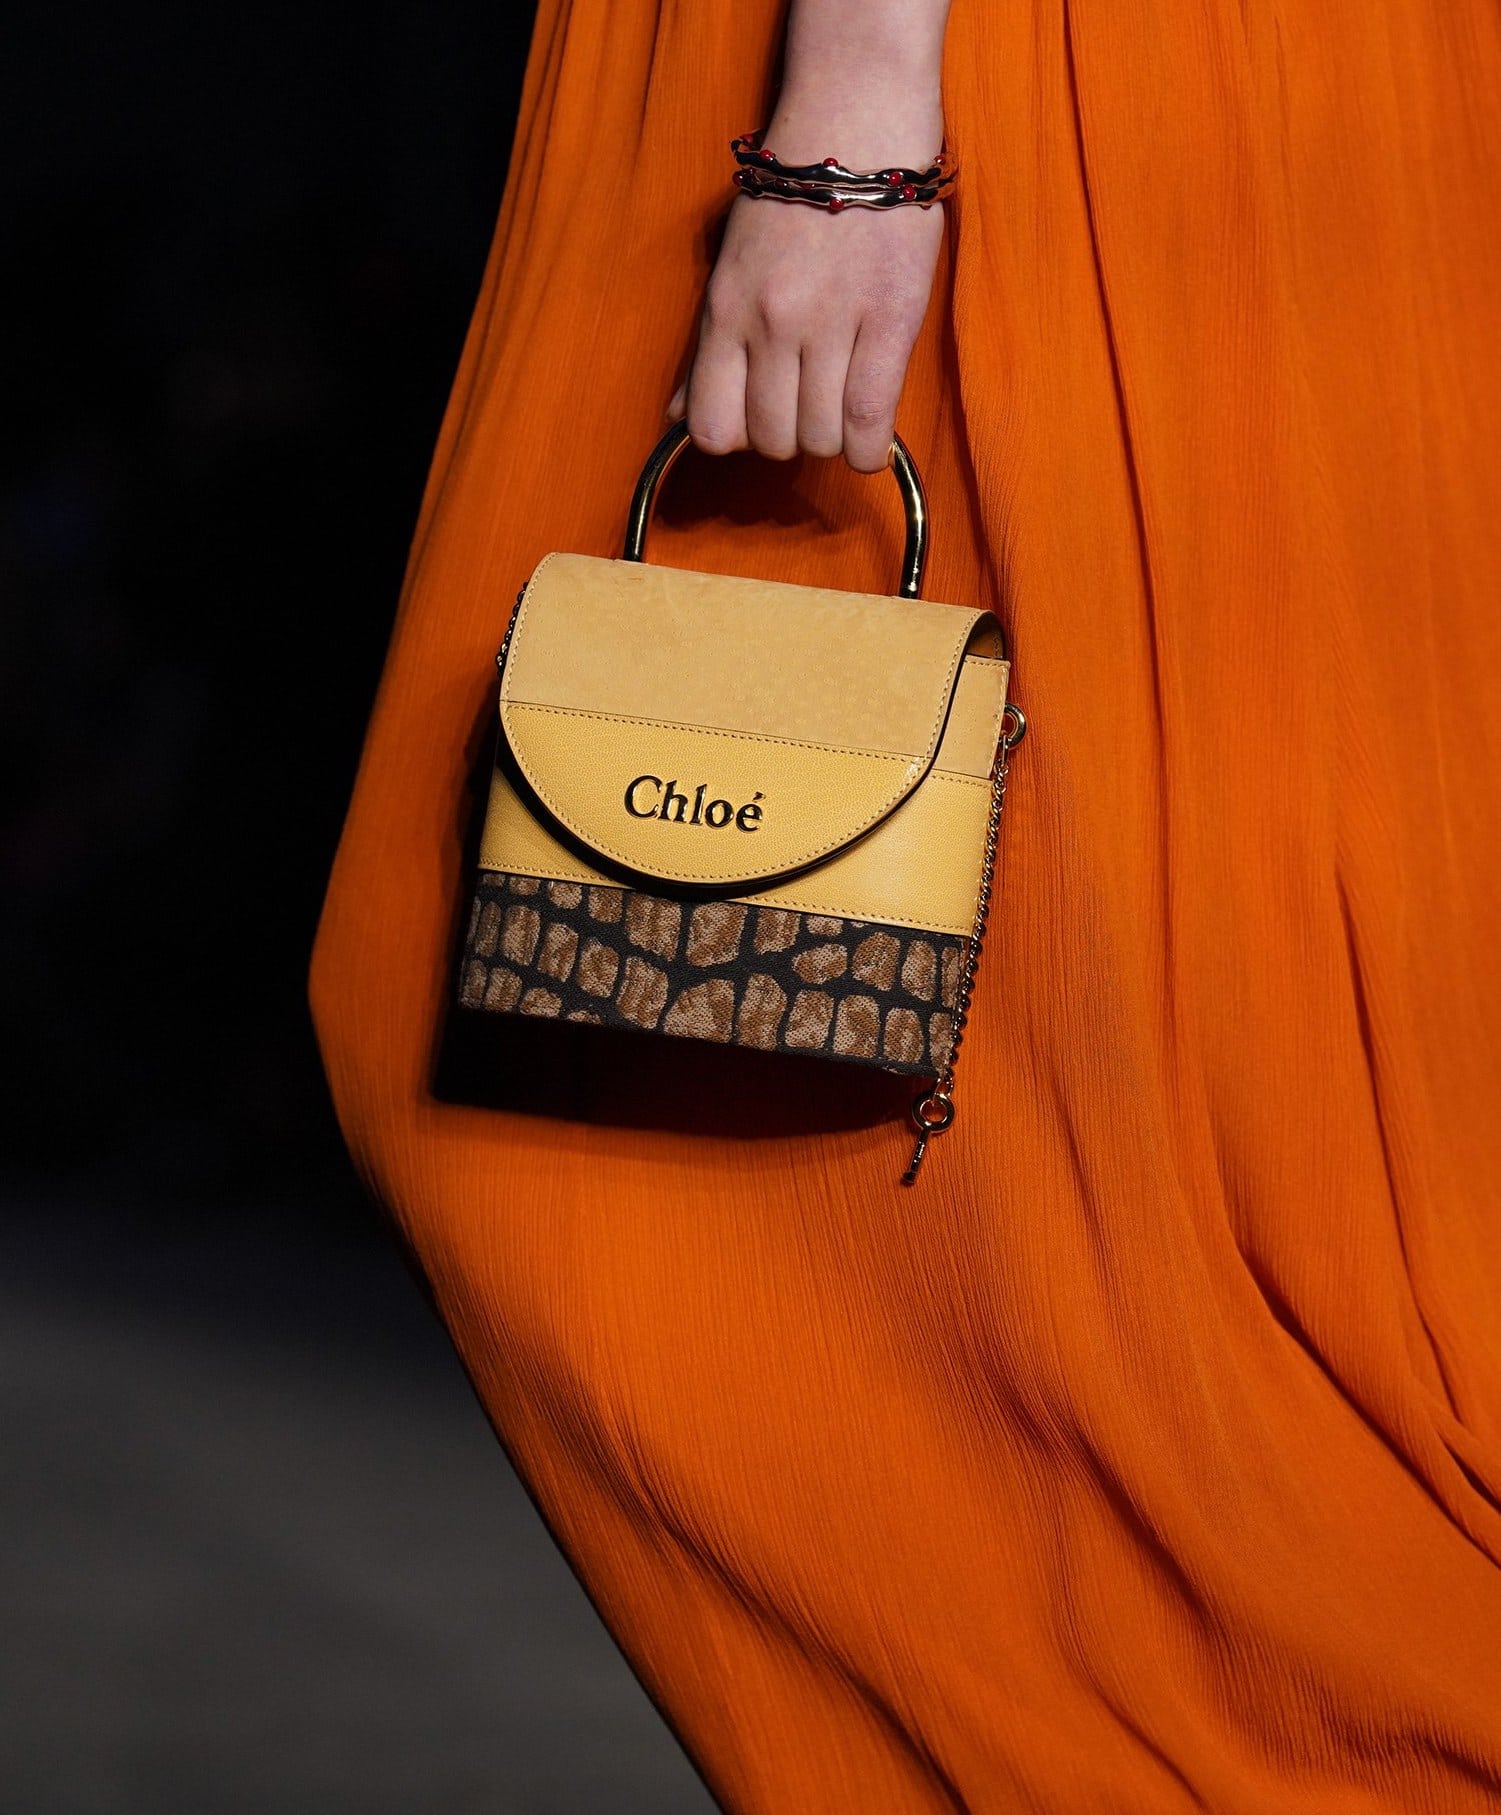 Chloe Fall 2021 Handbags Outlet | Paul Smith